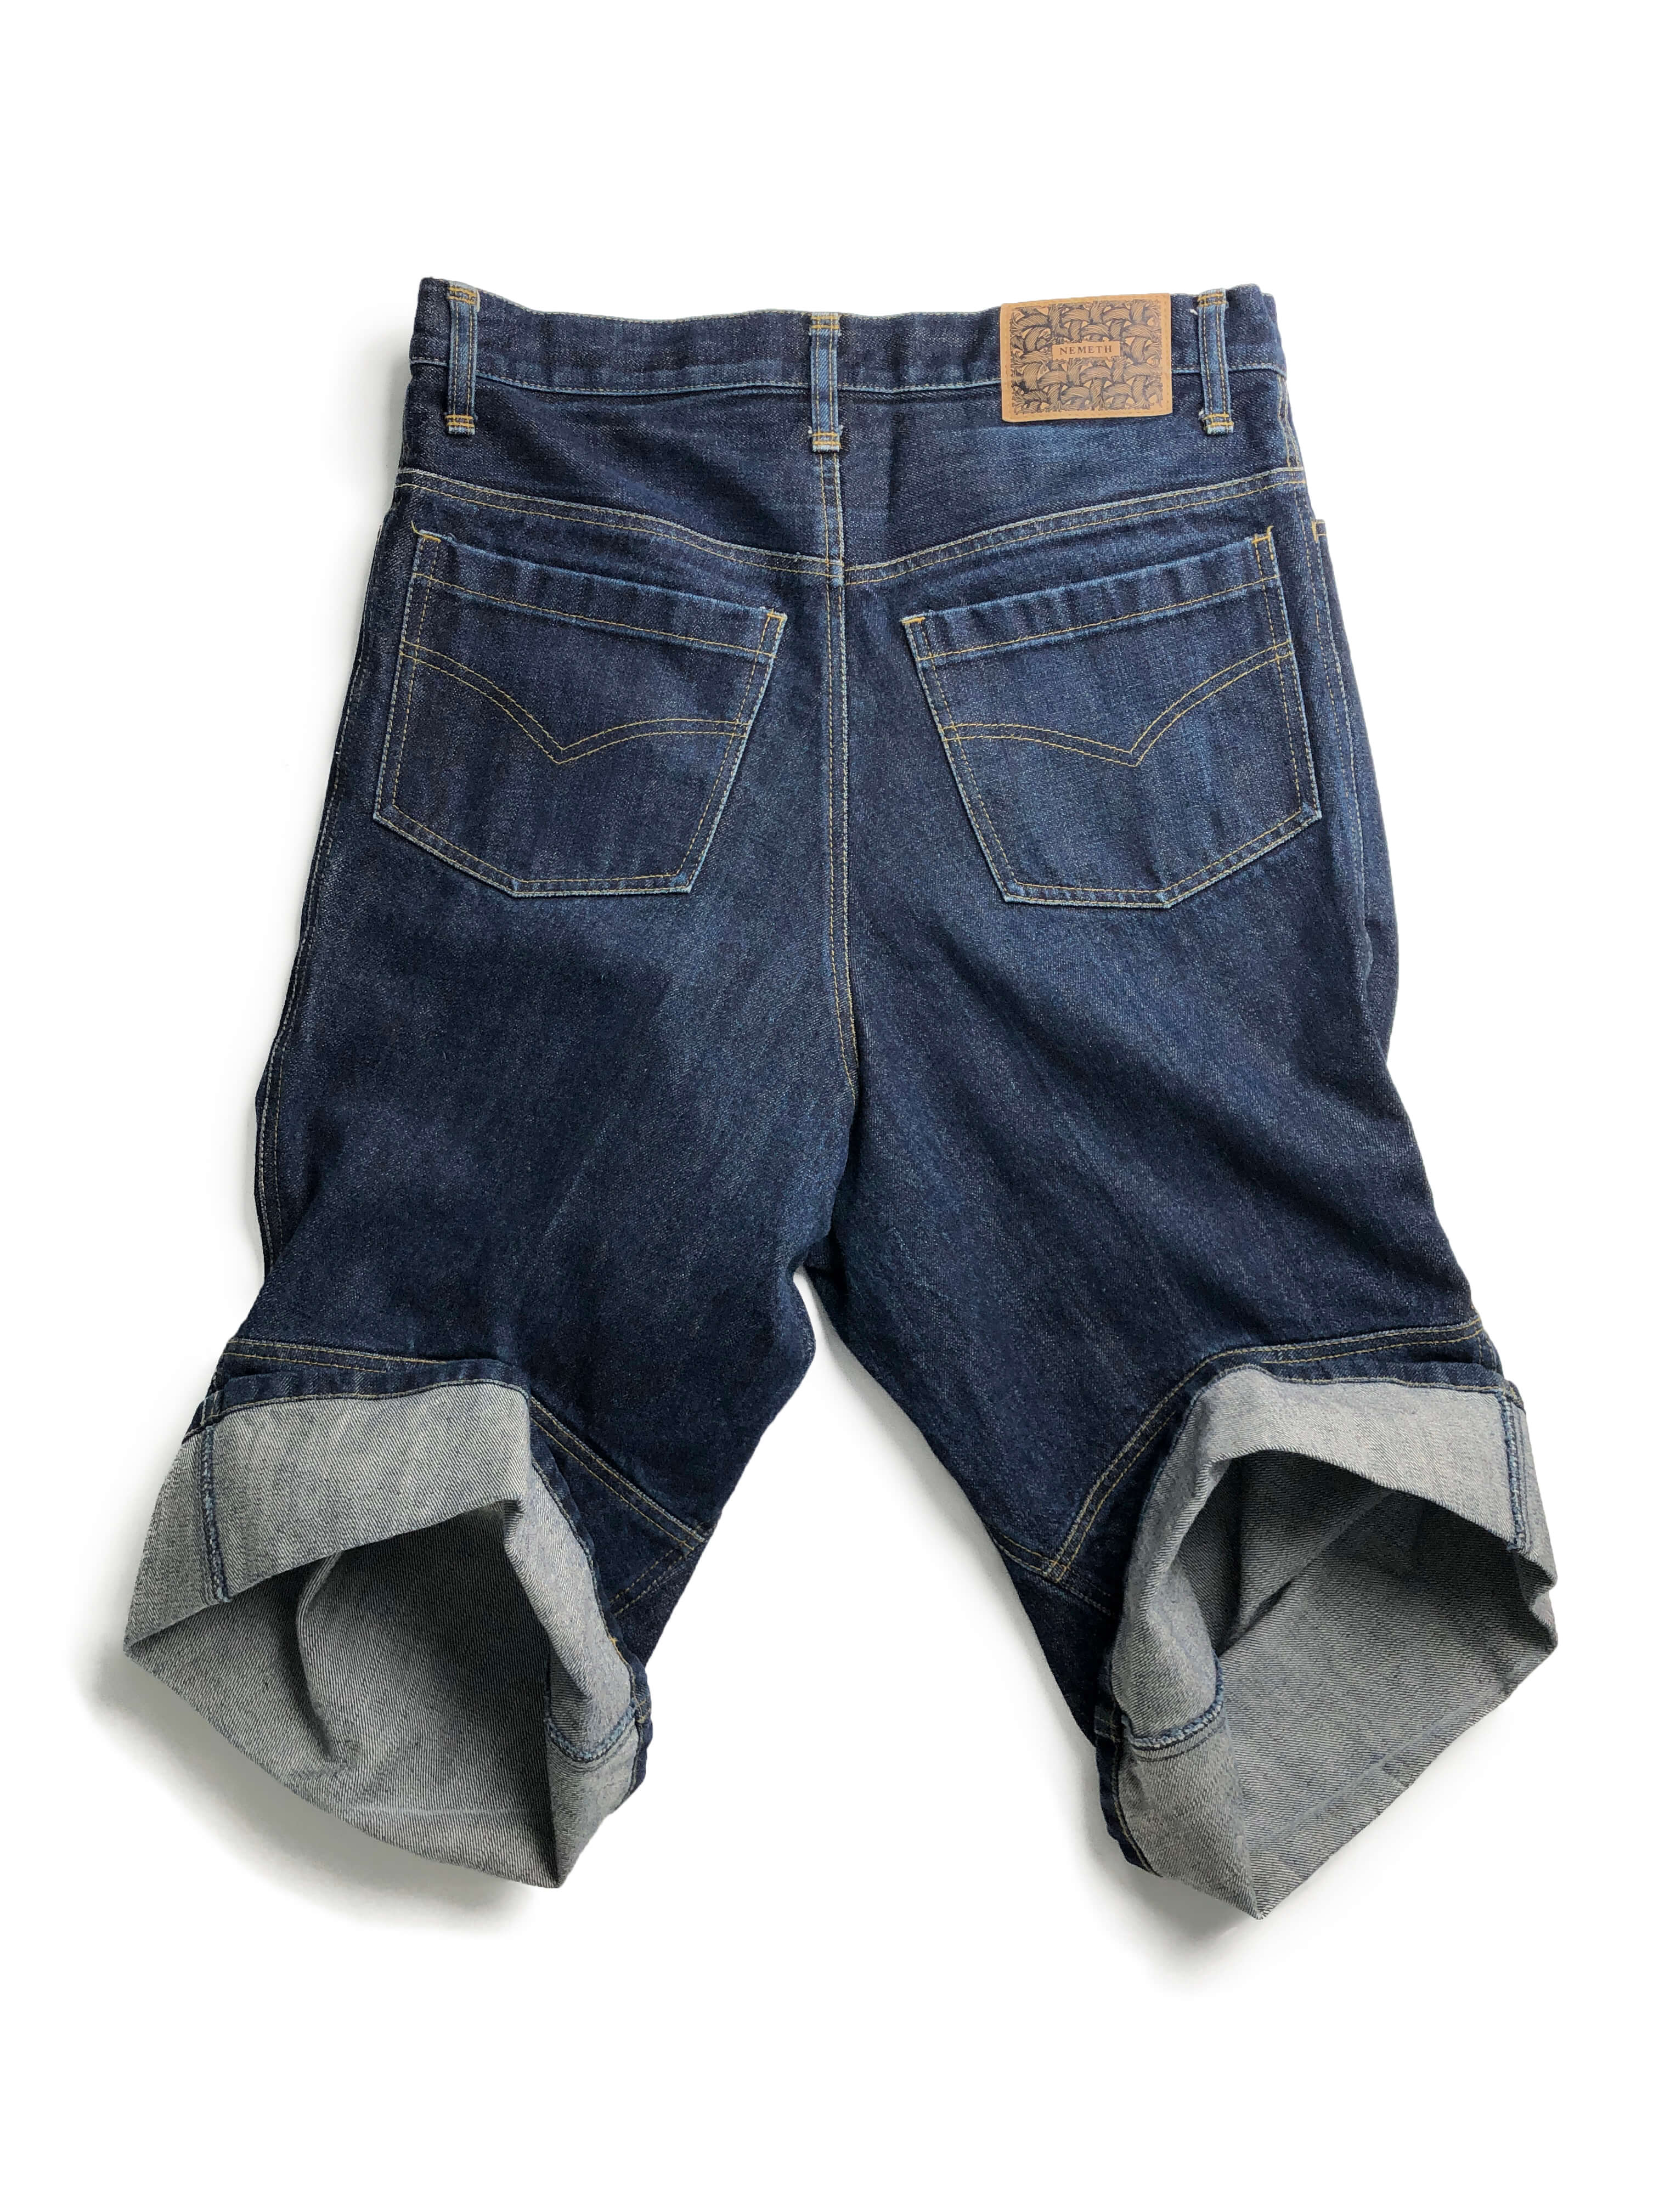 NEMETH 9911 pants